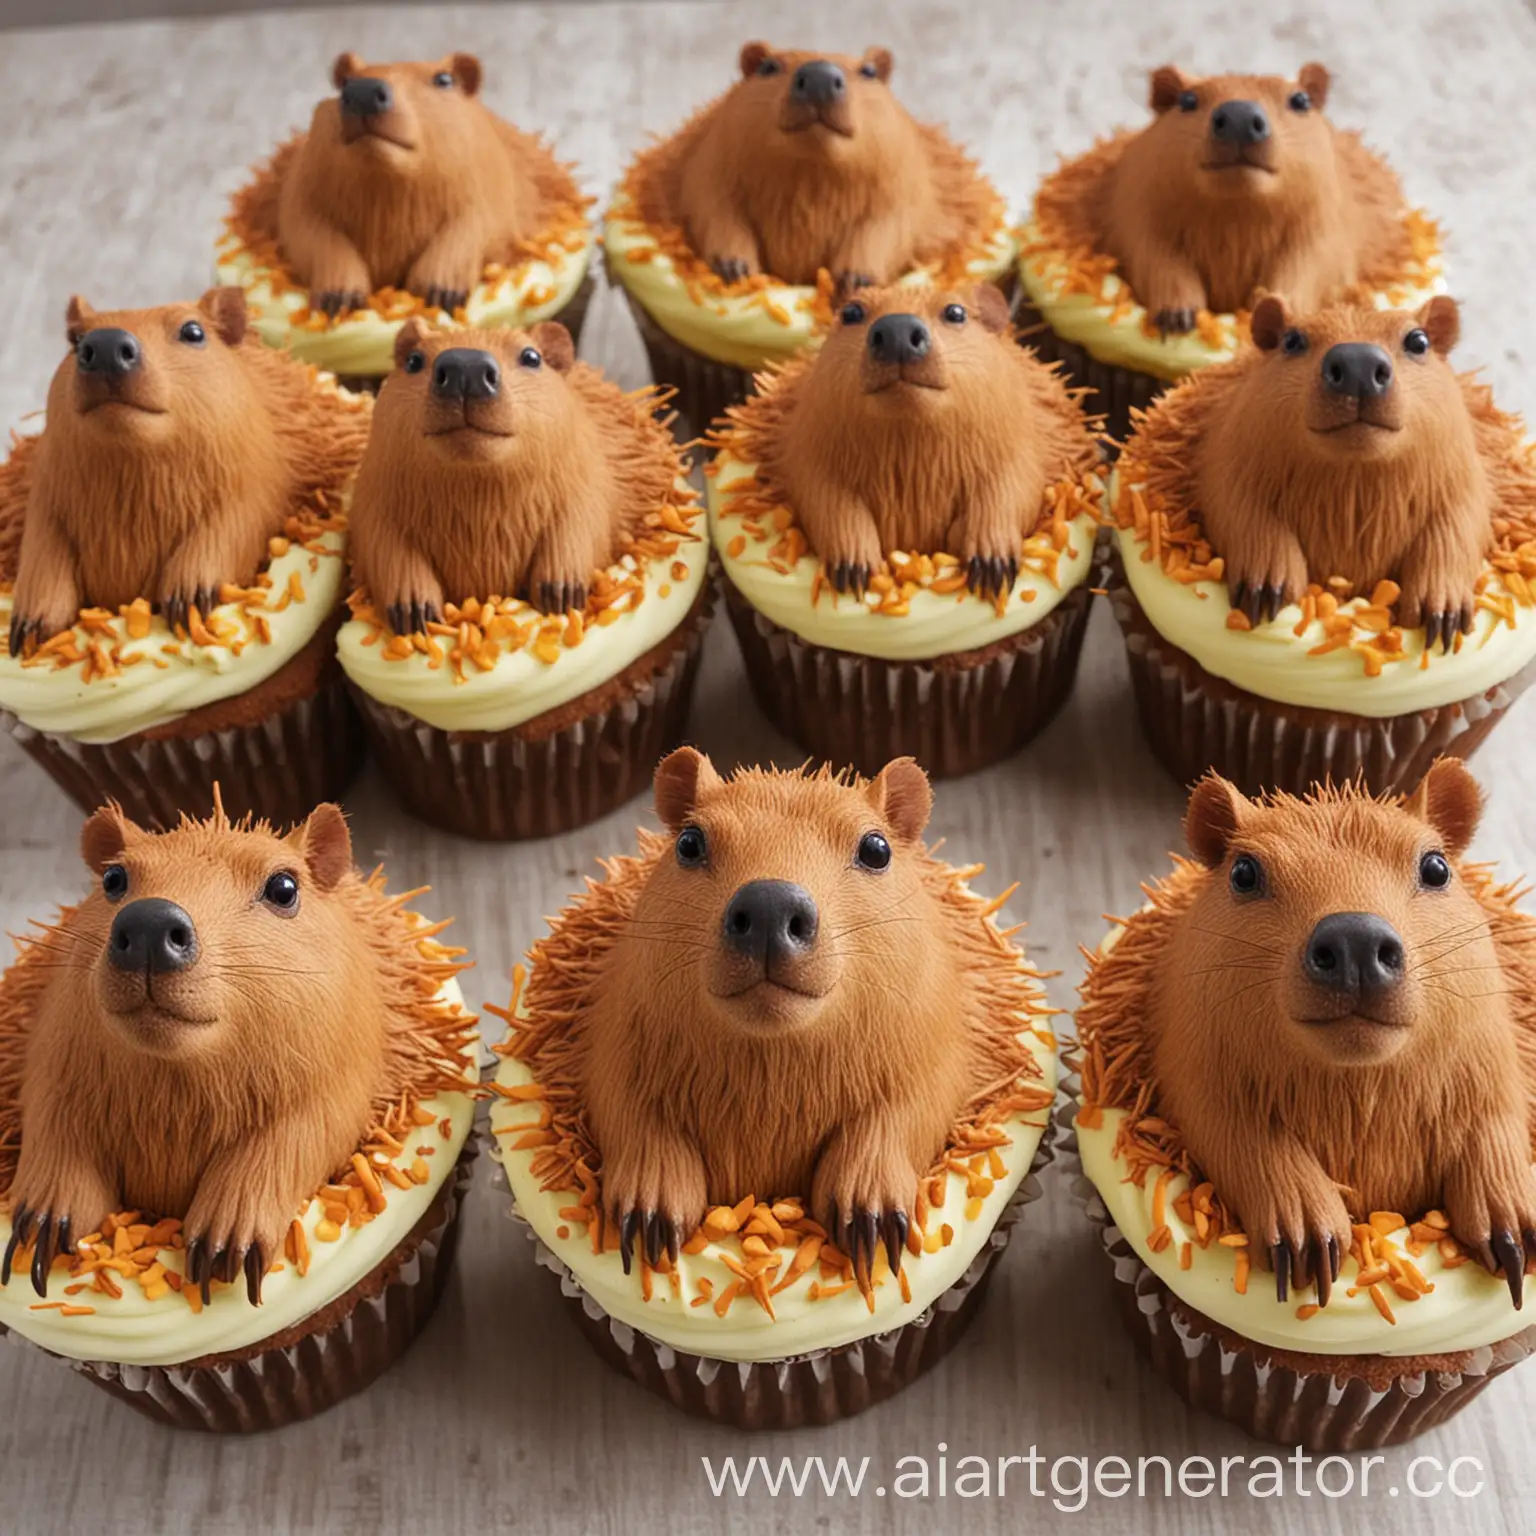 Decorated-Cupcakes-with-Capybara-Designs